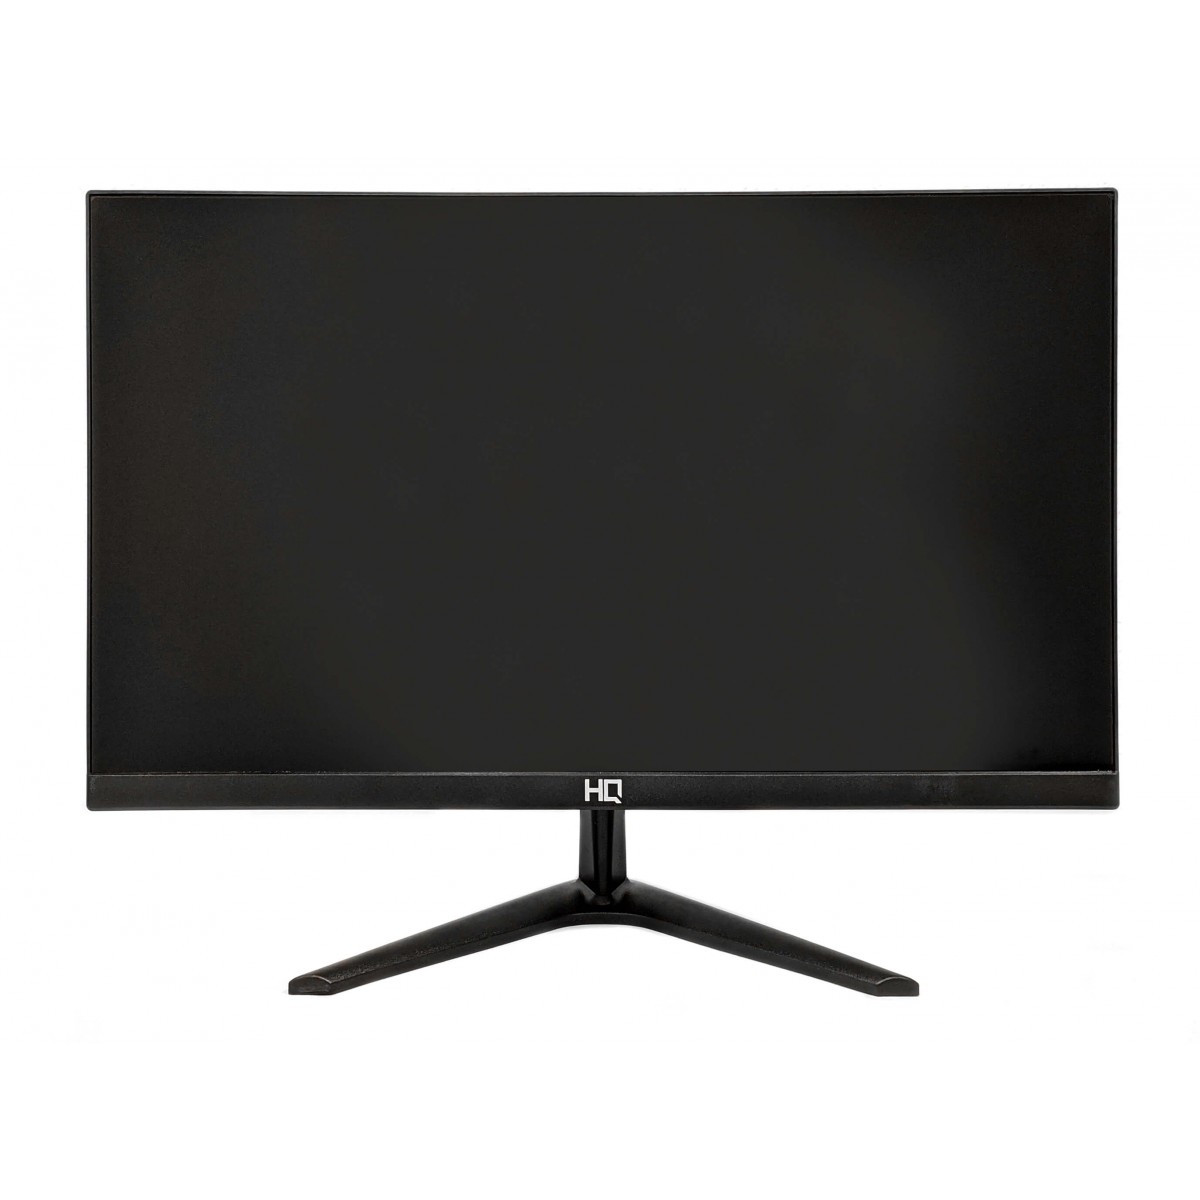 Monitor Gamer HQ LED 24 Pol, FULL HD, HDMI, Widescreen, Black - Open Box